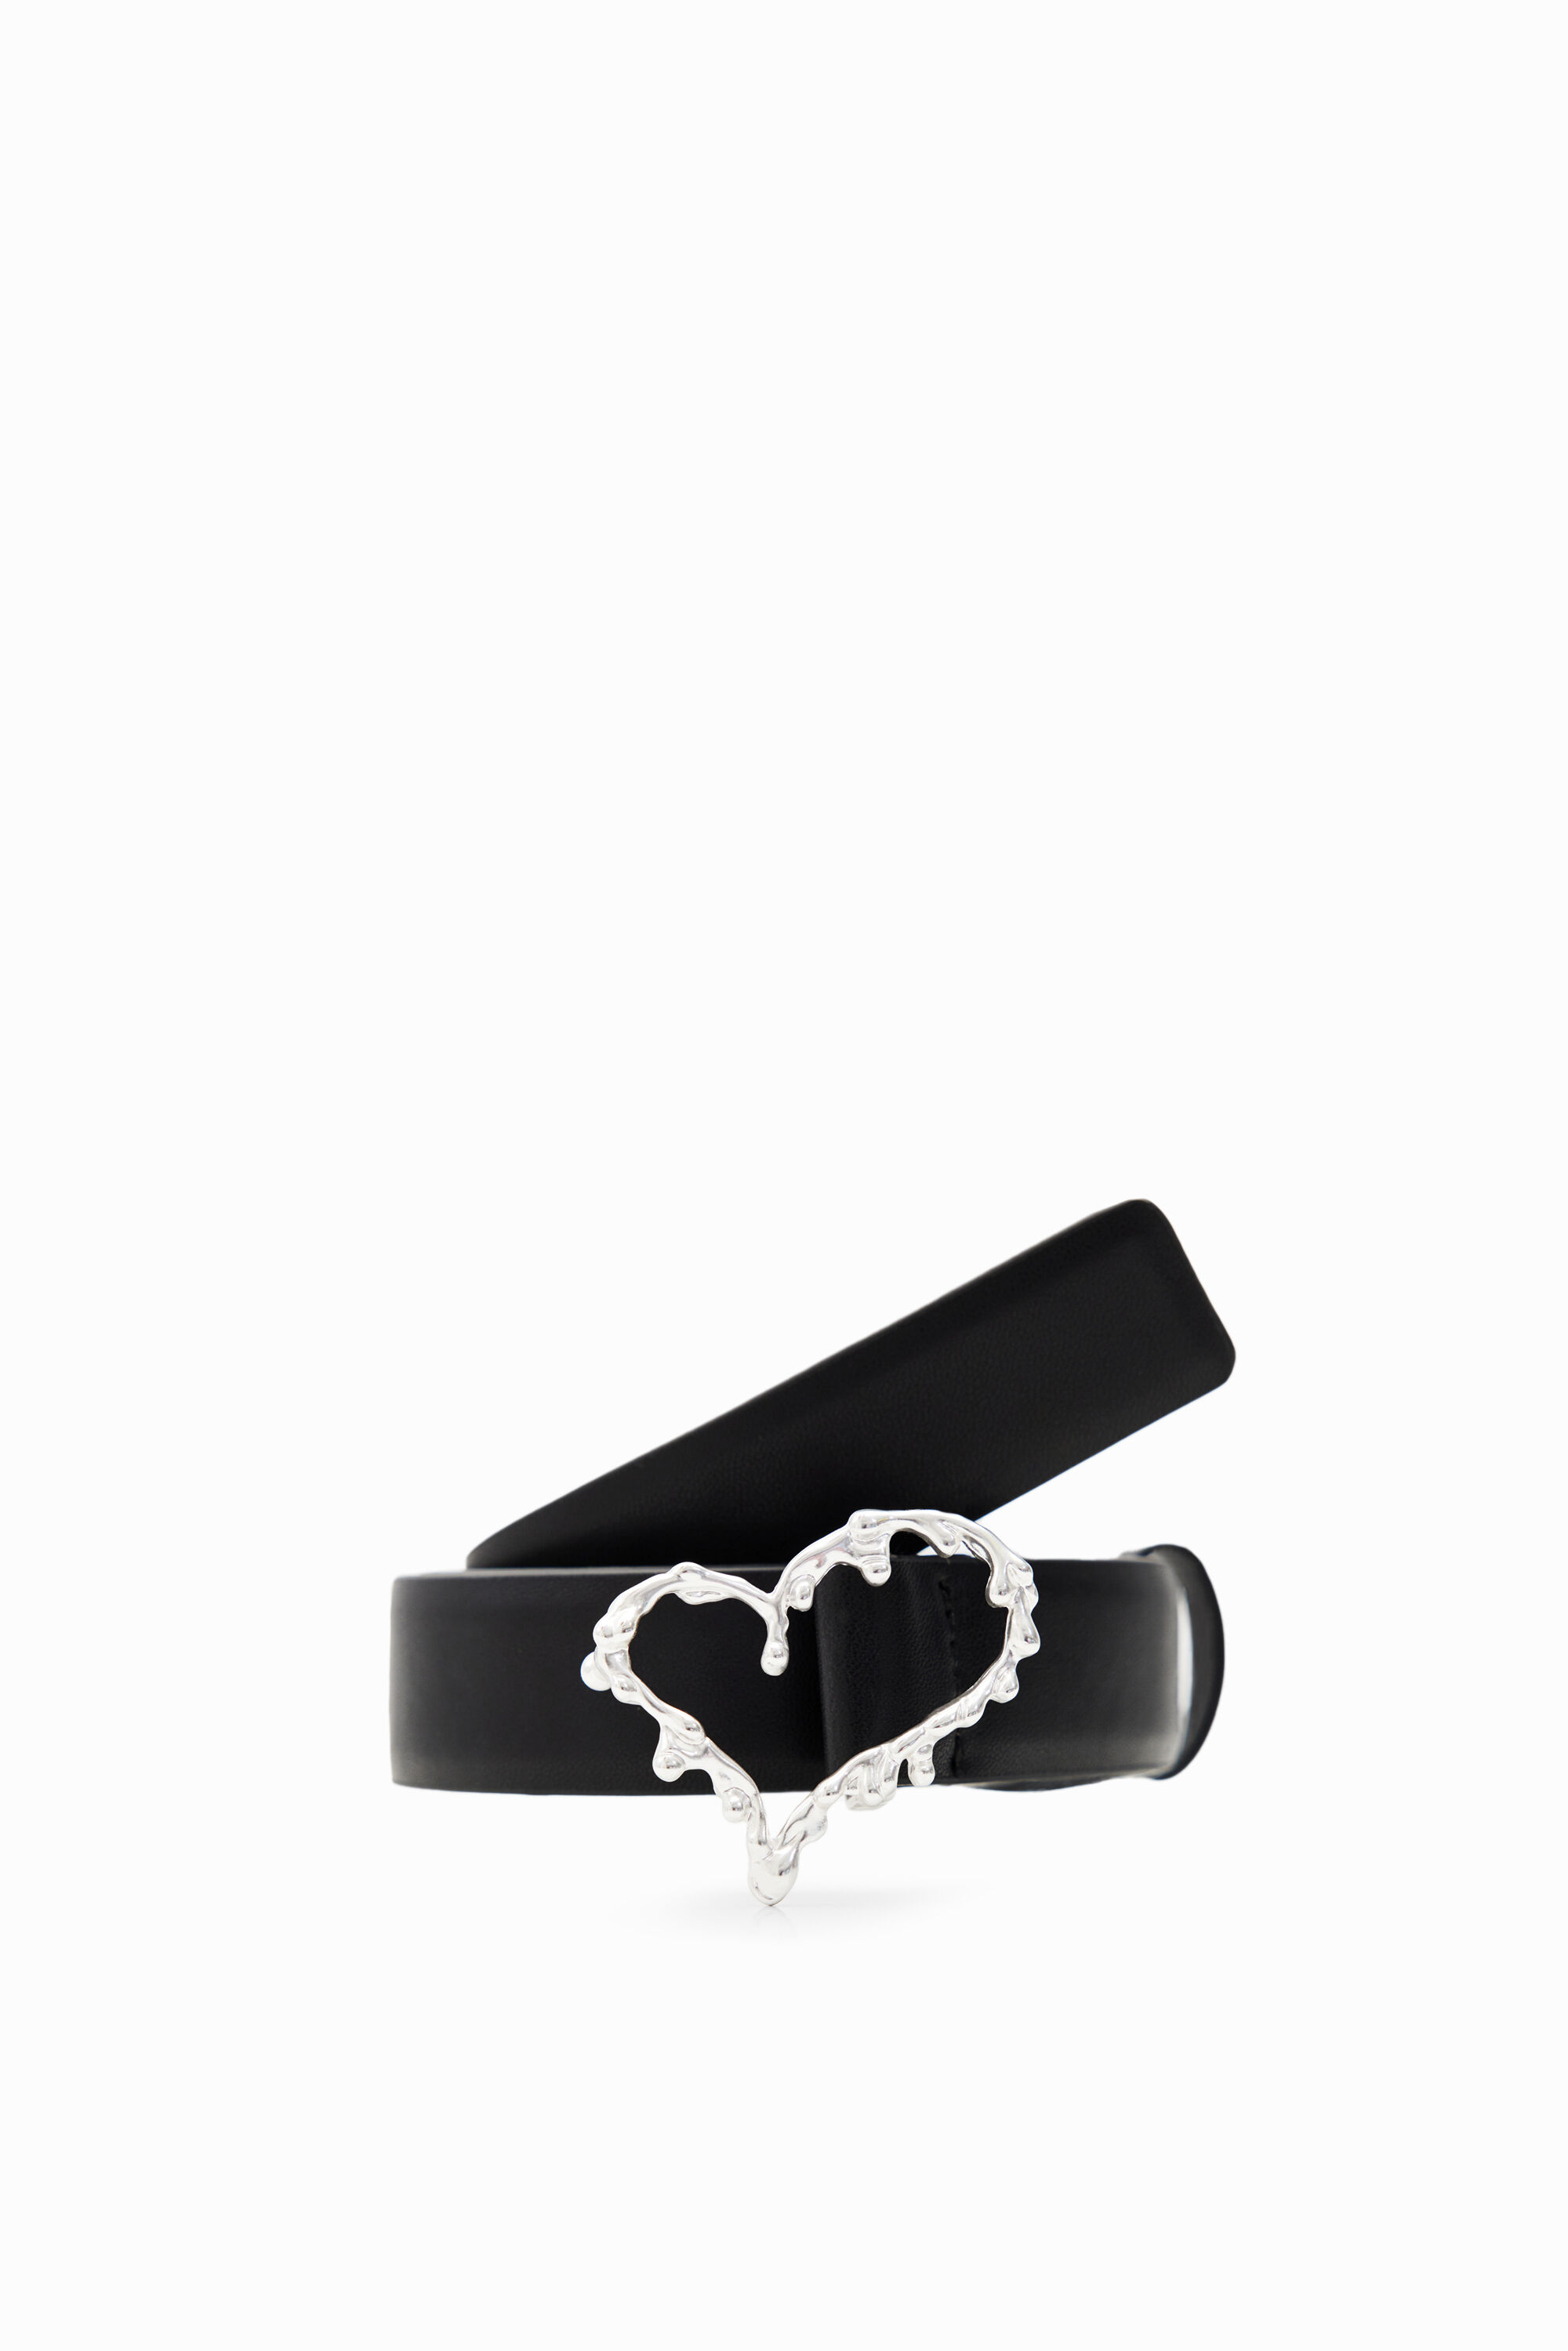 Desigual Zalio Leather Belt In Black